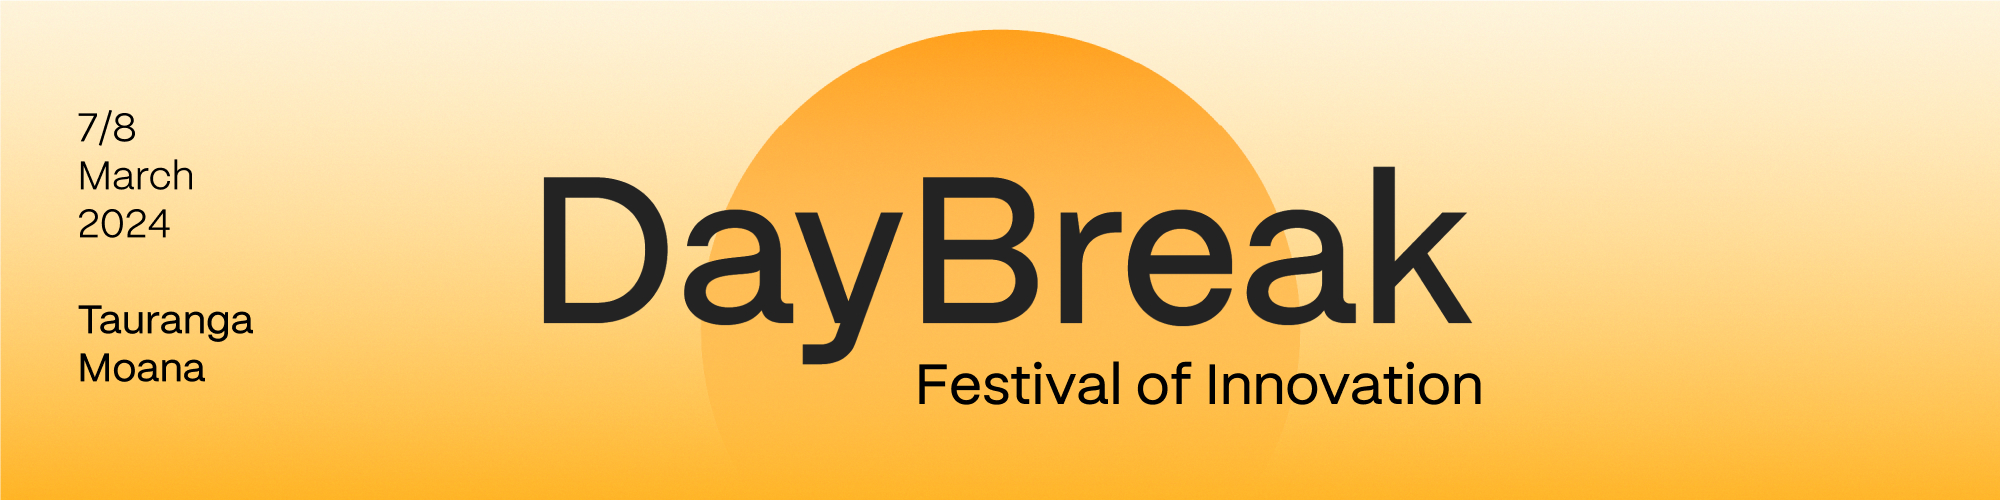 DayBreak Festival of Innovation logo, March 7-8 2024, Tauranga Moana